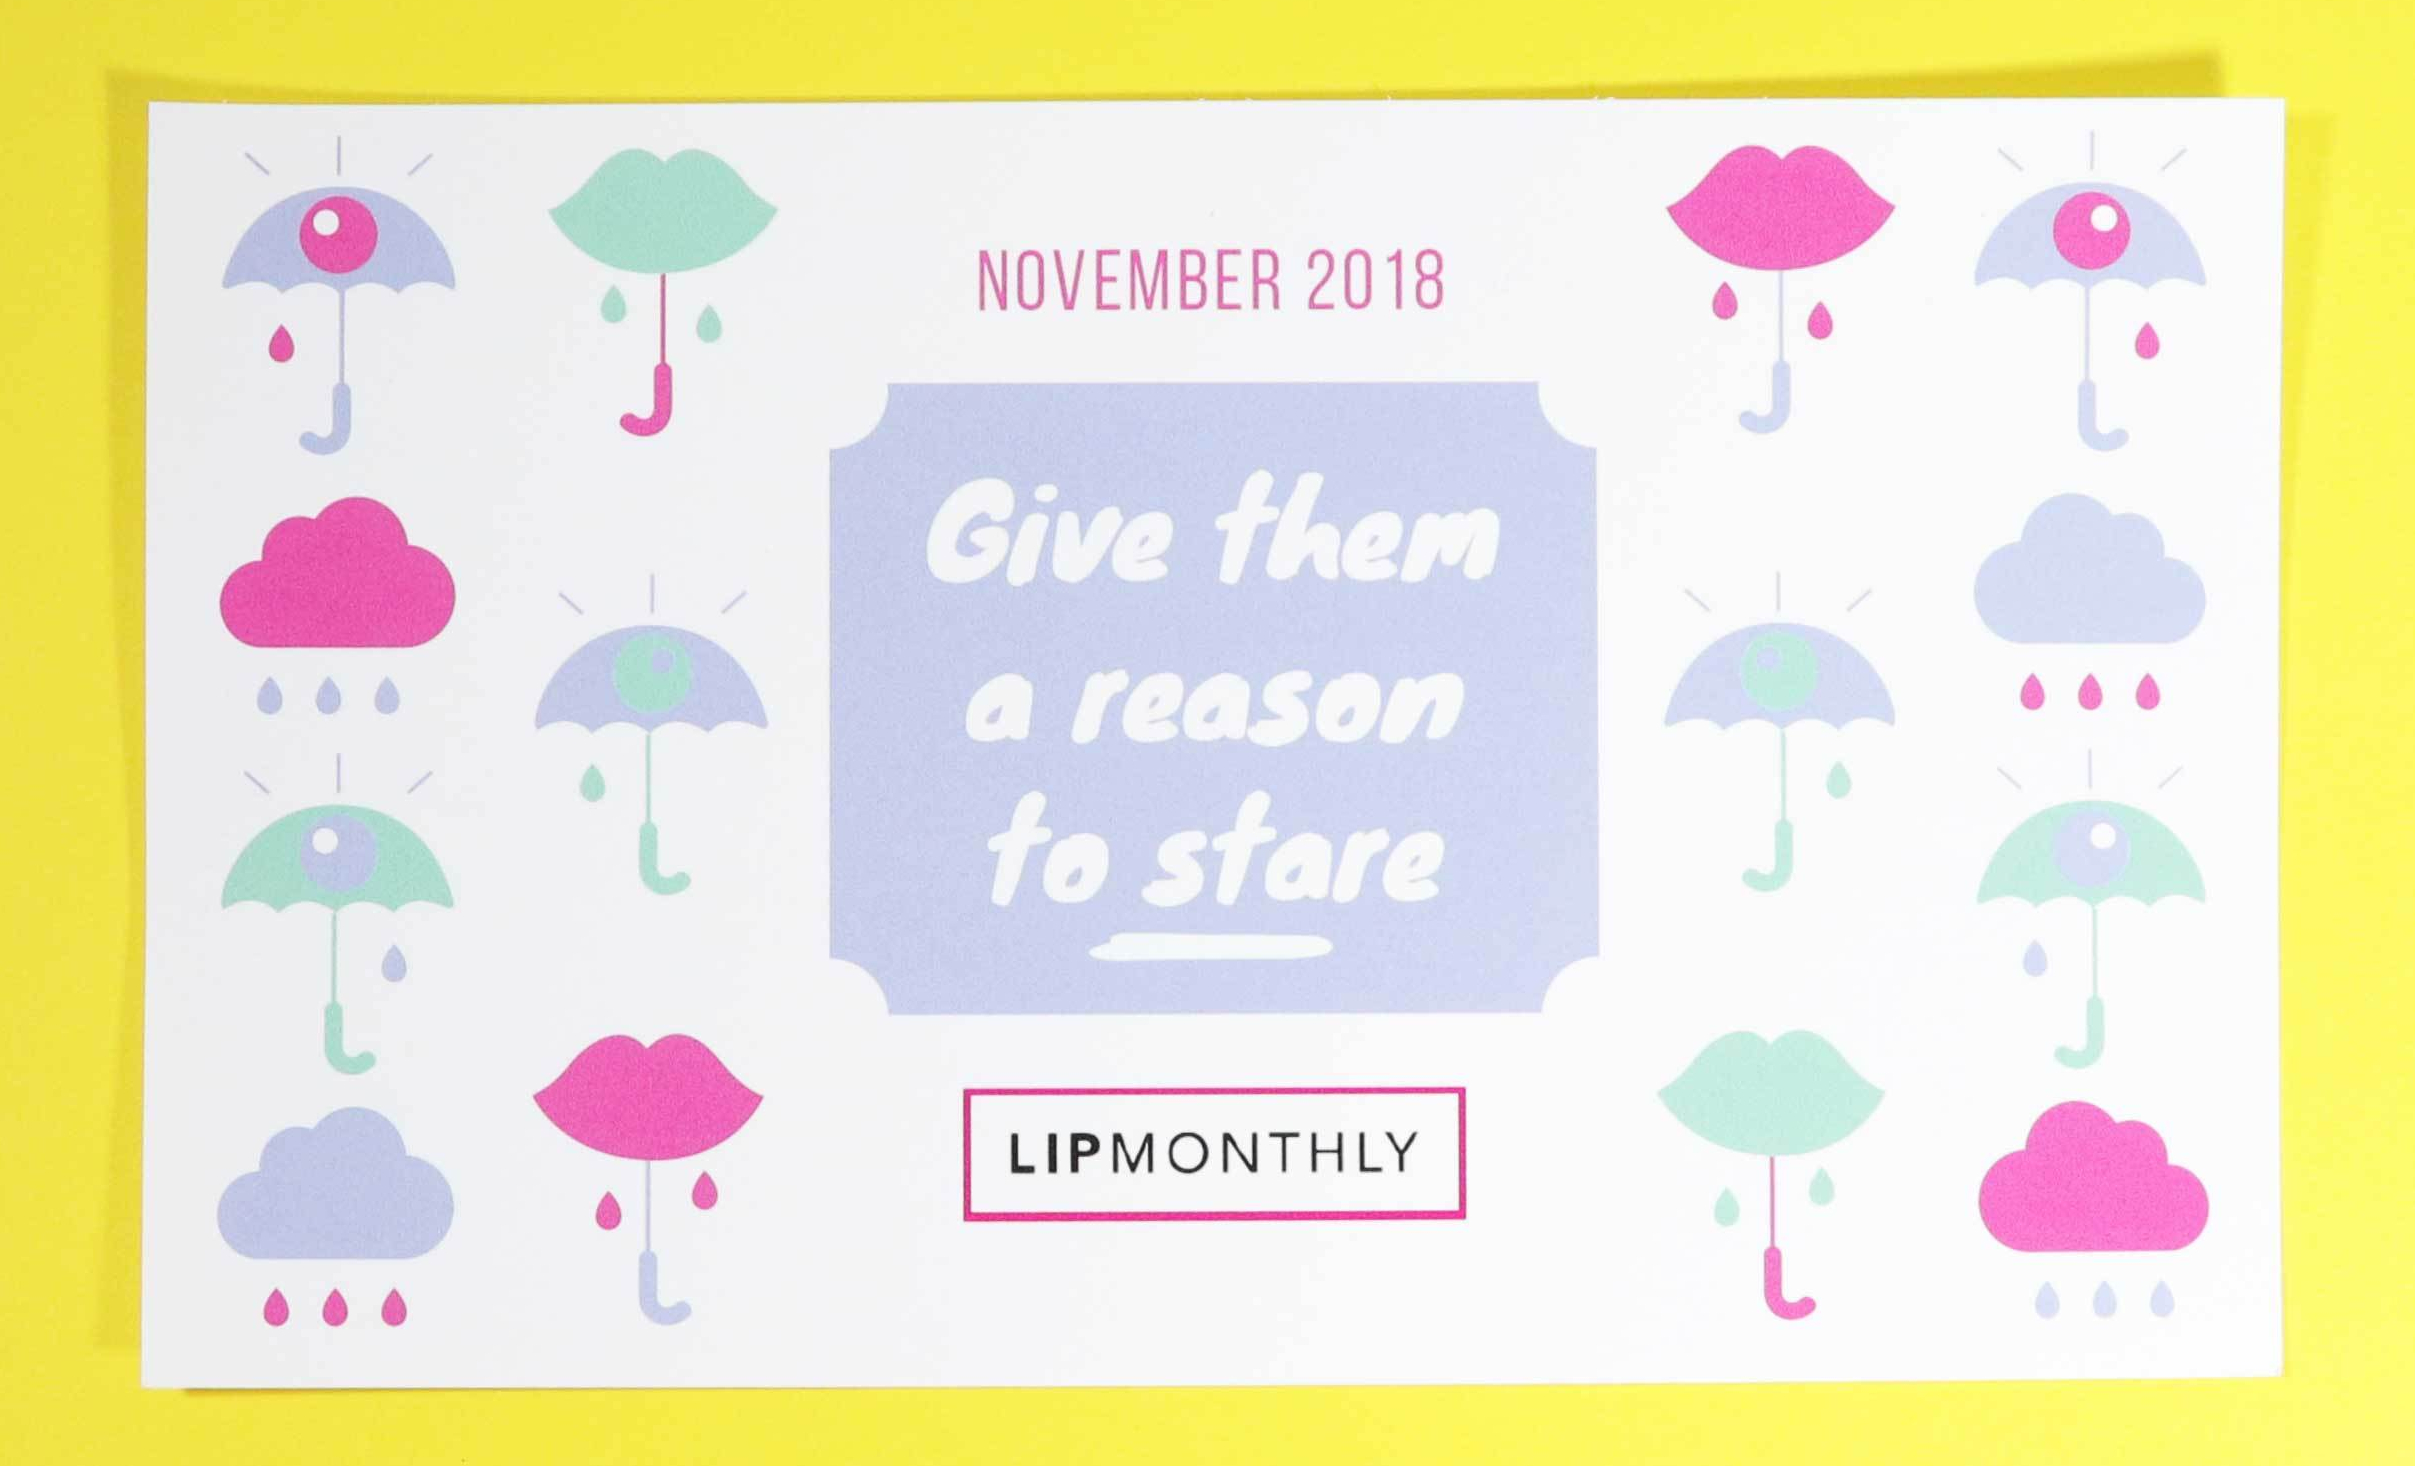 Lip Monthly November 2018